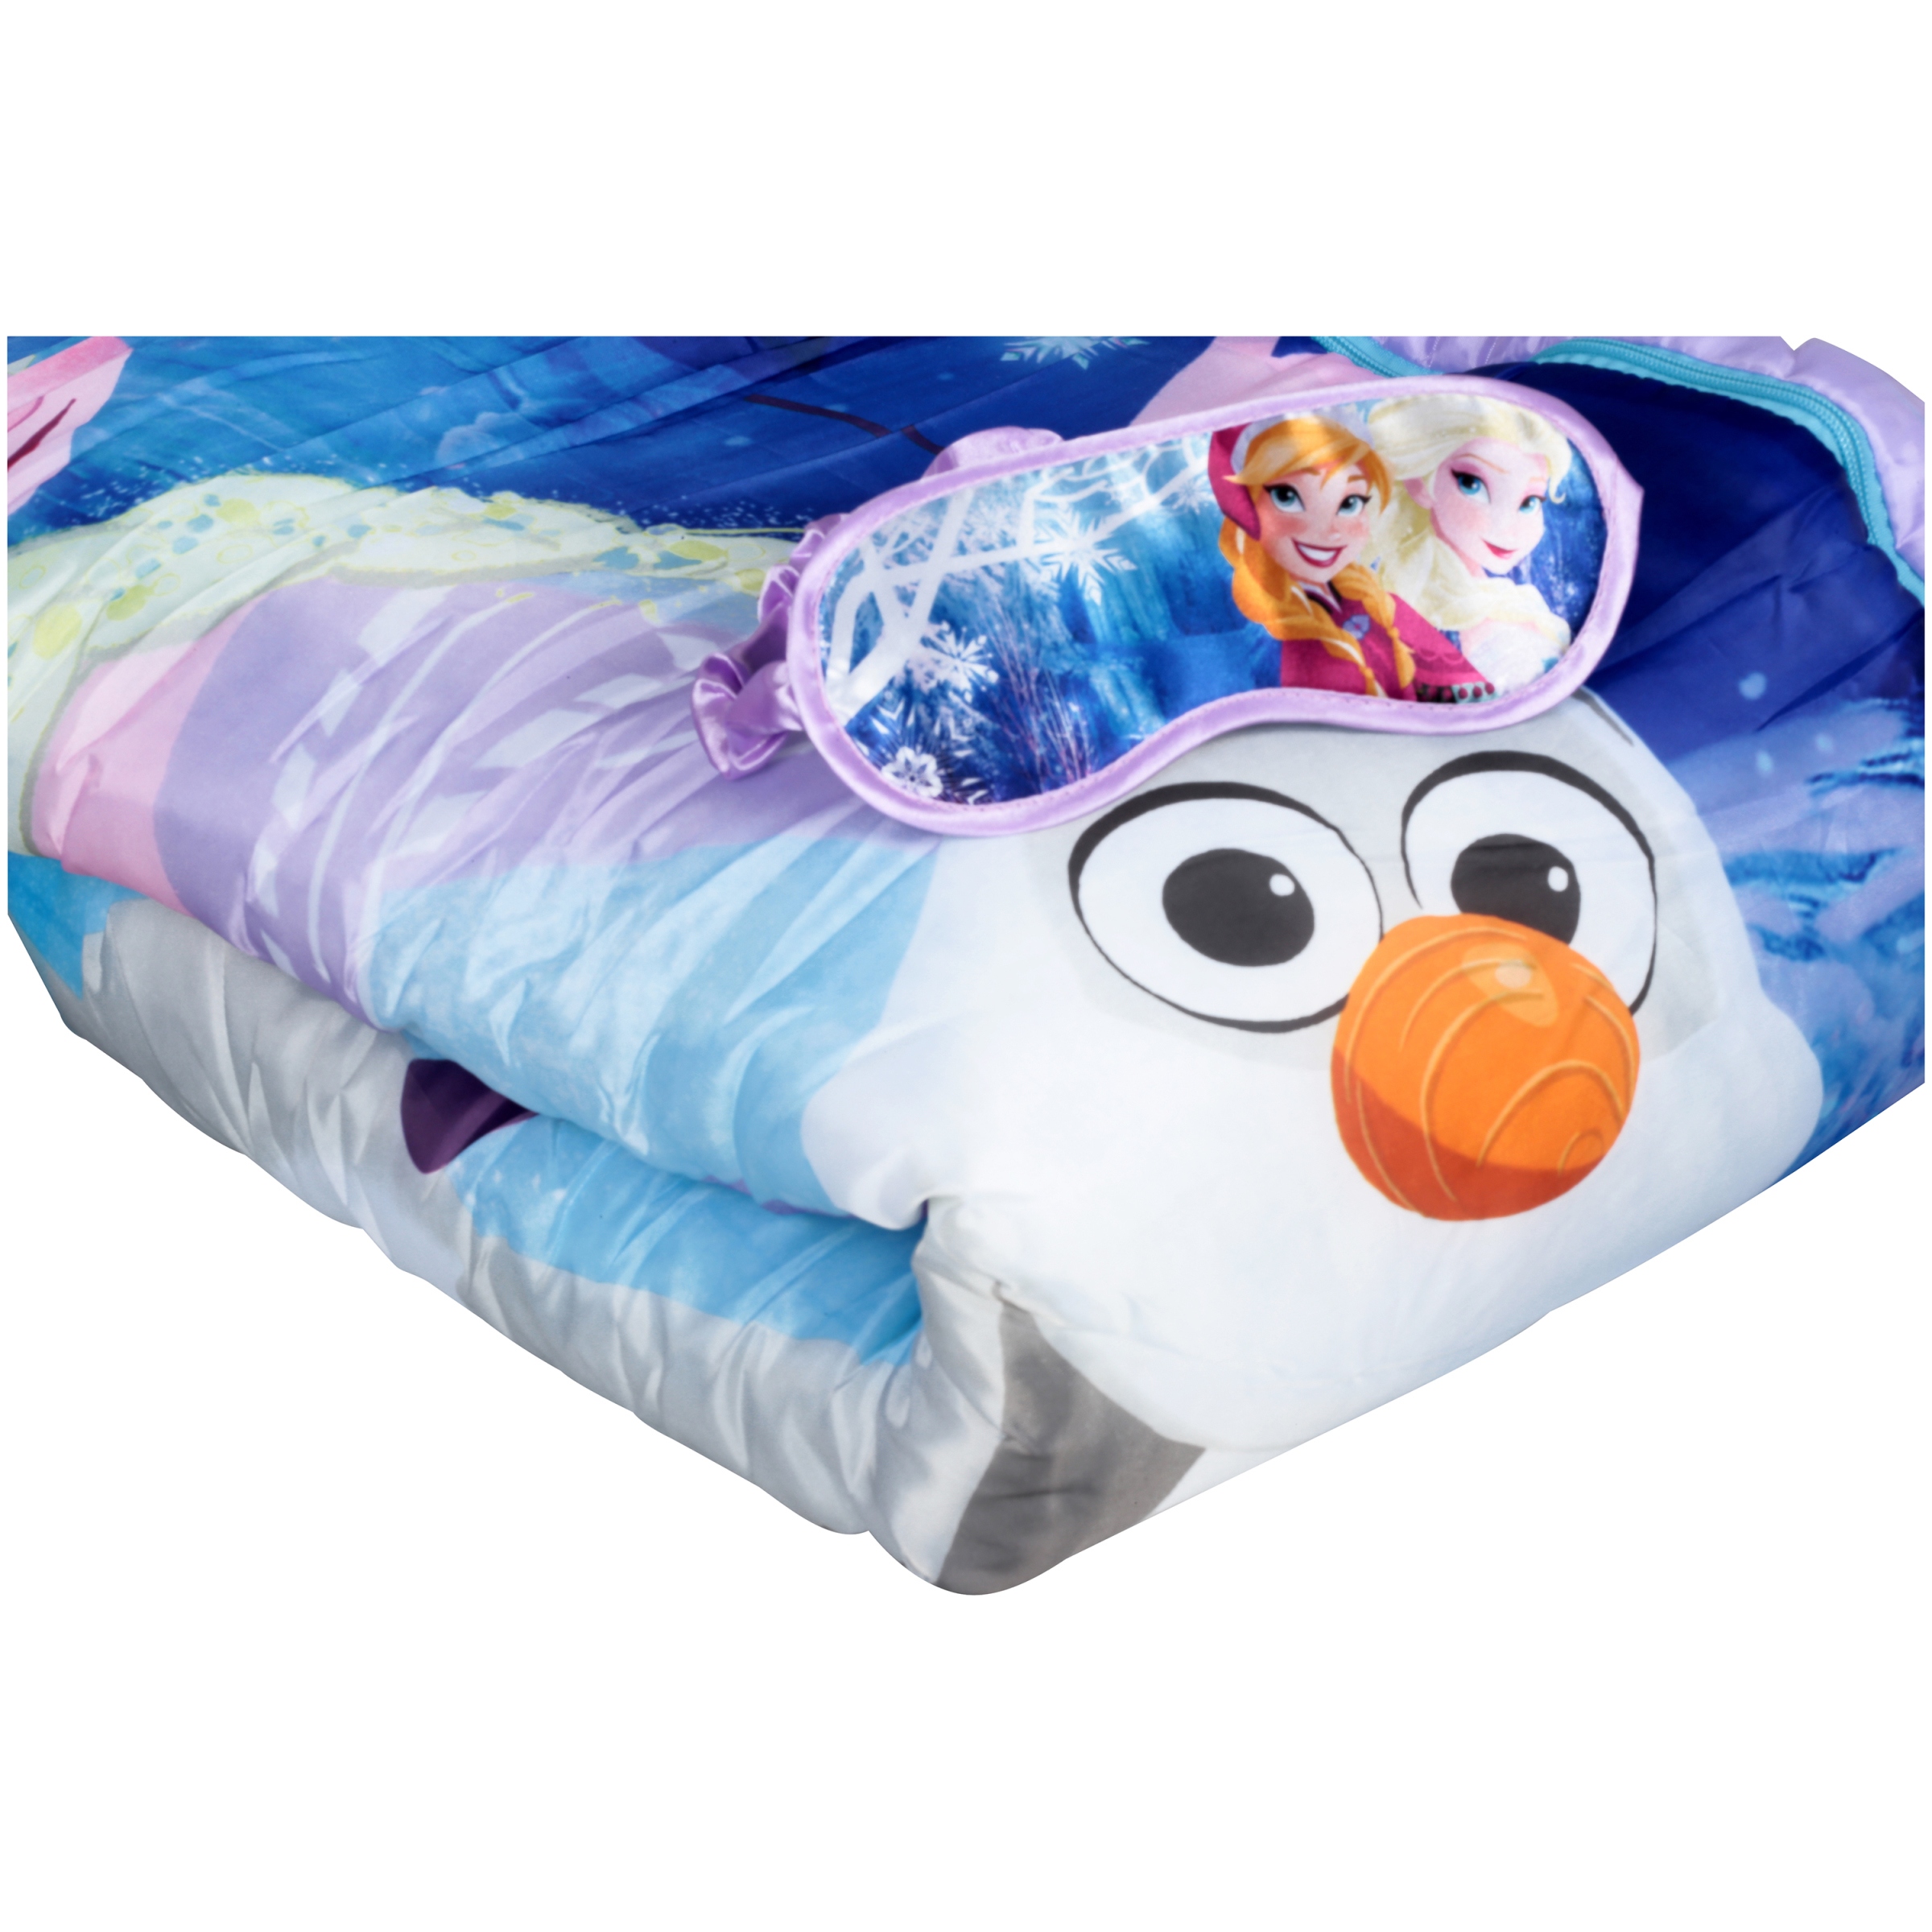 Disney Frozen Sleepover Slumber Nap Mat with Purse and Bonus Eye Mask - image 3 of 5